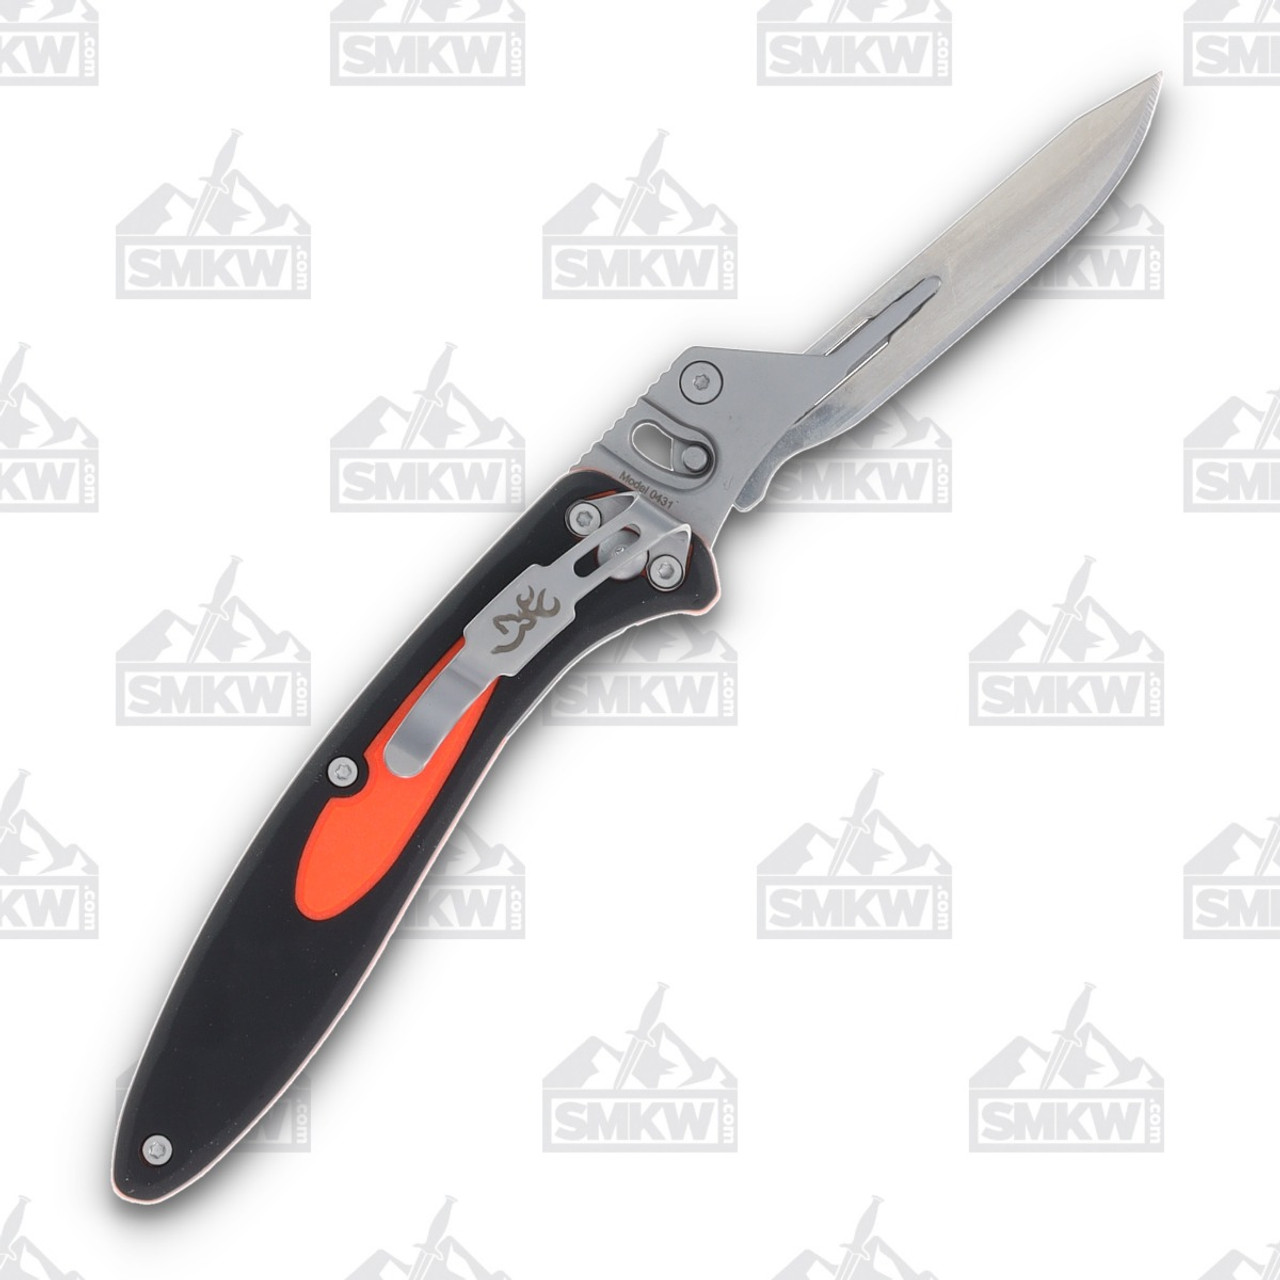 Browning Primal Scalpel Folding Knife 2.75 Satin Replaceable